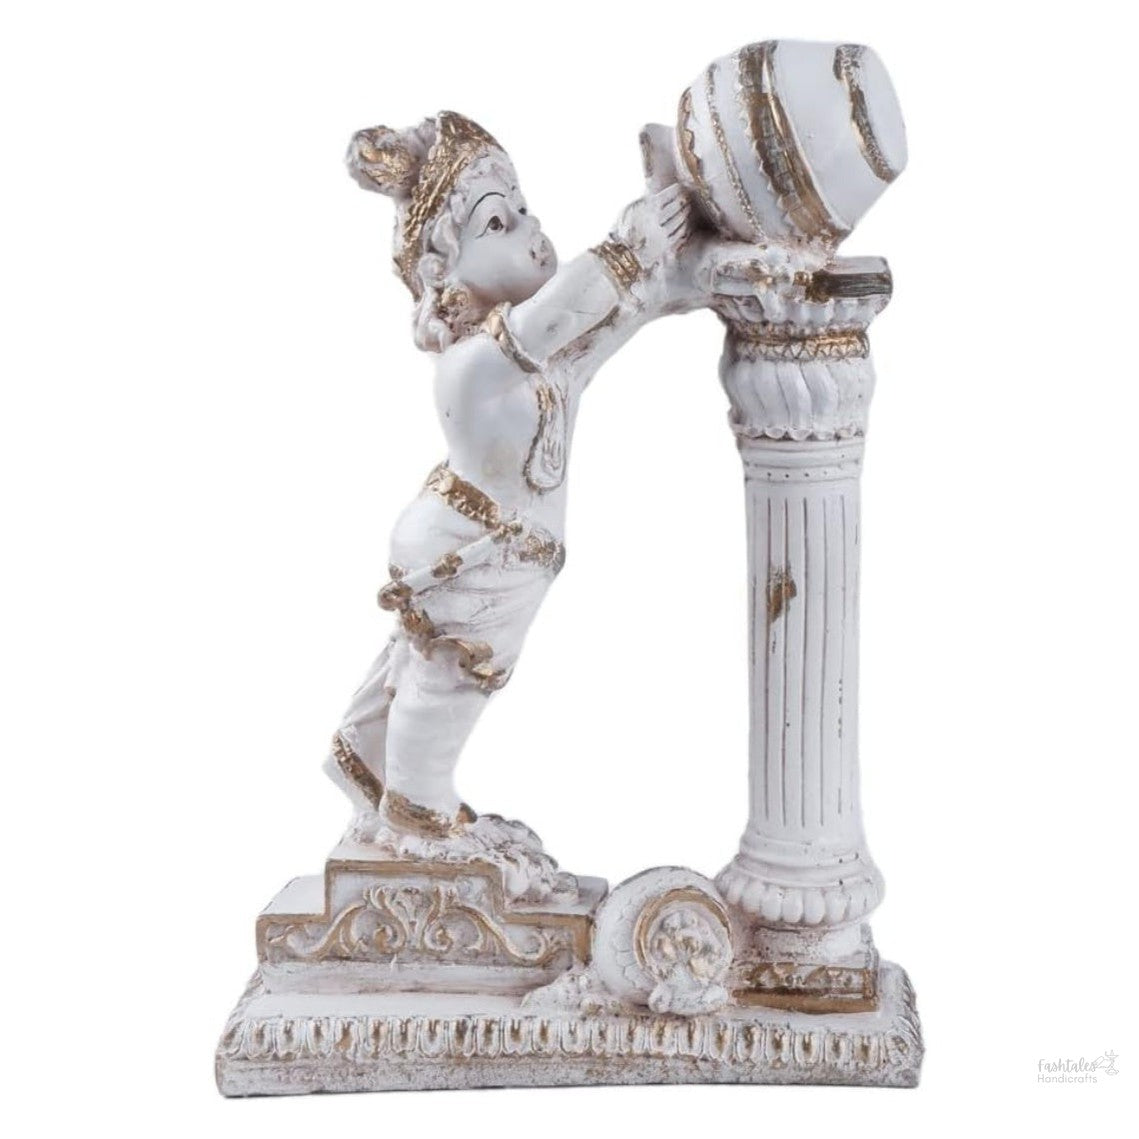 Fashtales Handirafts Premium Lord Krishna Figurine Lord Krishna Kanha Makhan Chor Idol Statue Sculpture Figurine Decorative Showpiece for Home Table Pooja Room Temple and Gift Item,Resin,White